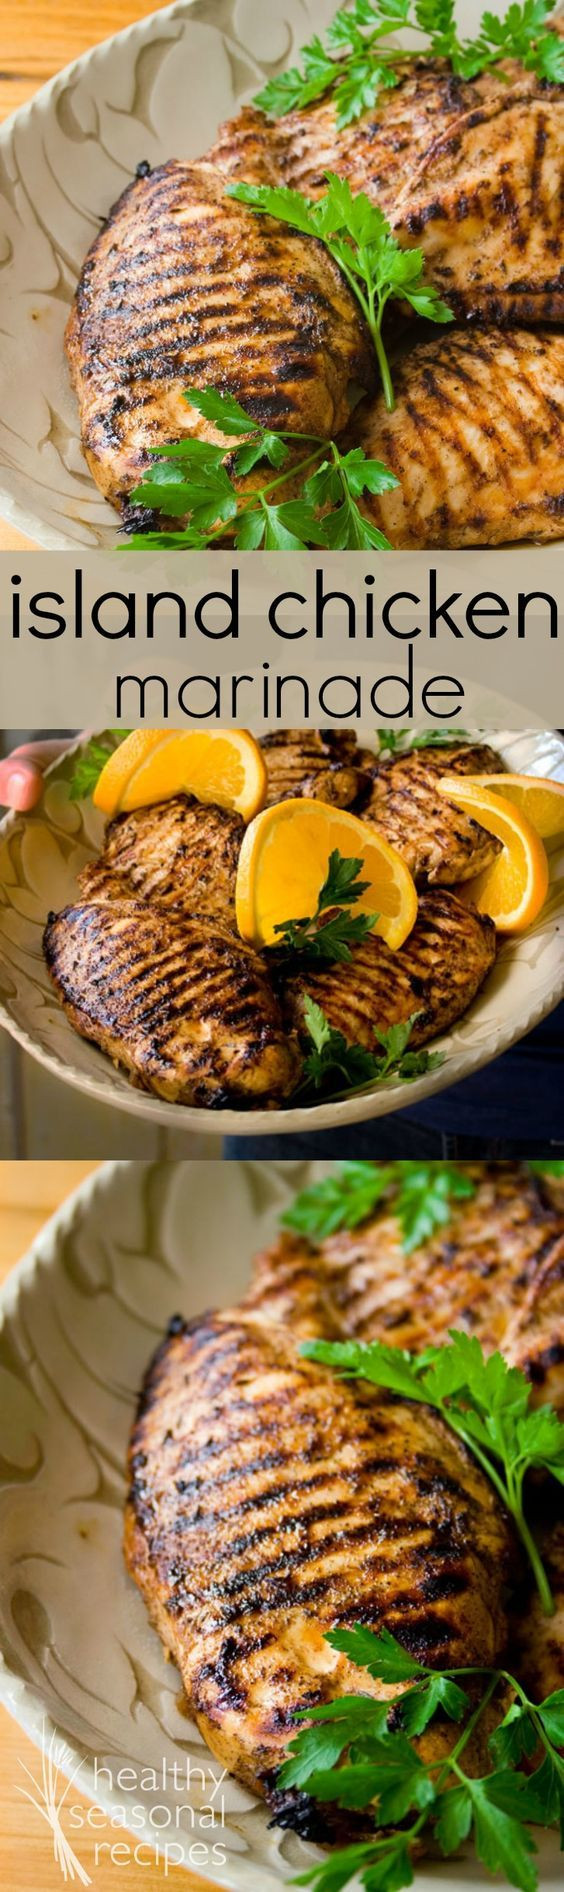 Healthy Marinades For Chicken
 1000 ideas about Healthy Chicken Marinades on Pinterest